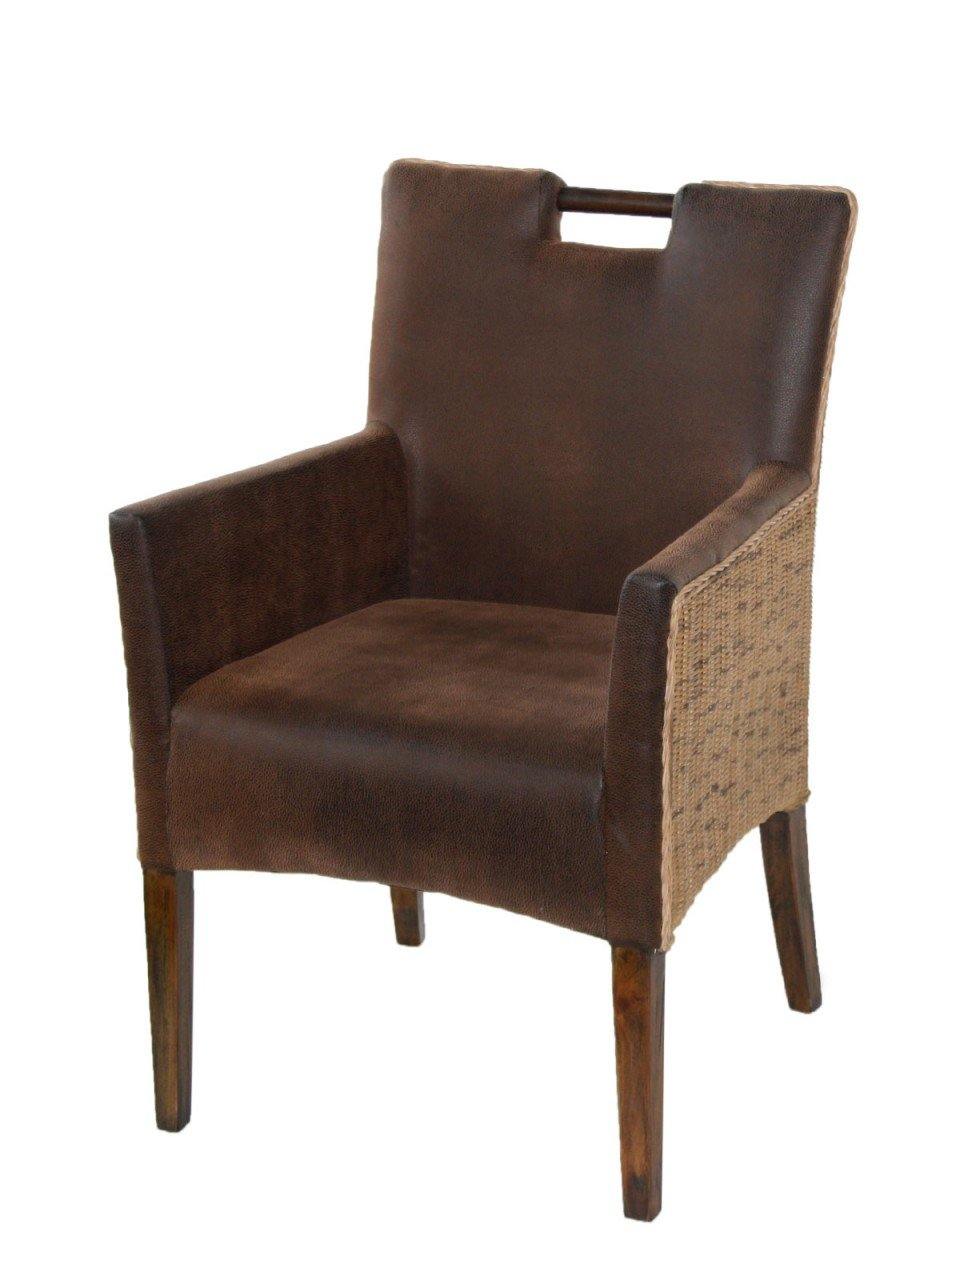 4-er Set Esszimmer Stühle Rattan Armlehner Sessel Bilbao vollgepolstert Polster prairie brown - 1a-zuhause.de